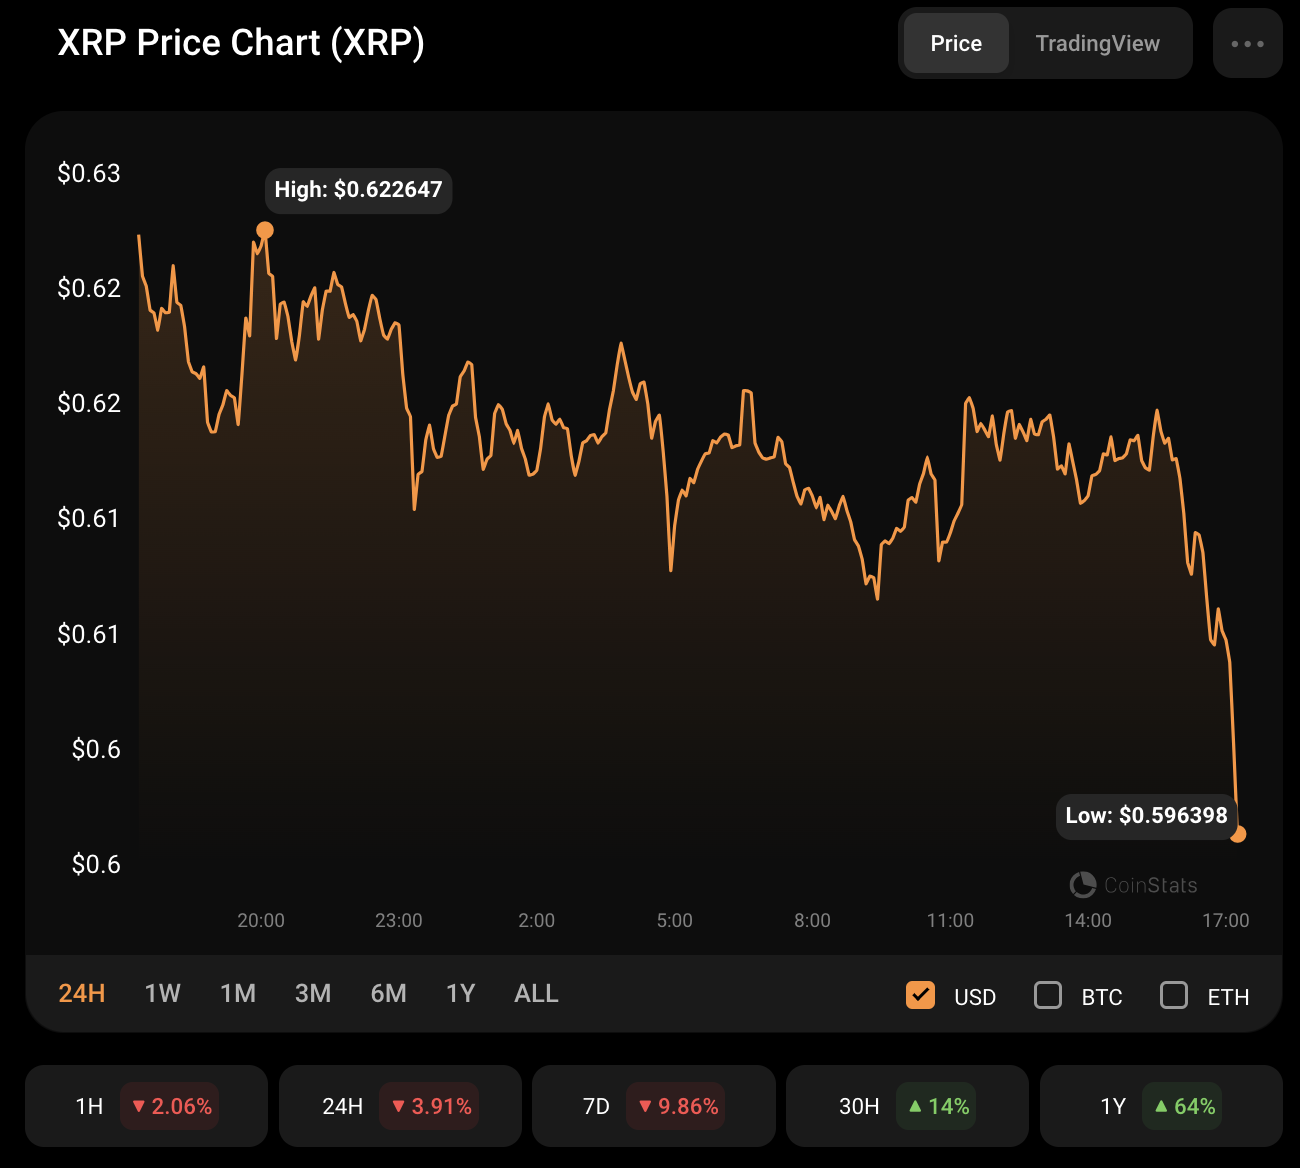 XRP Price Analysis for November 21